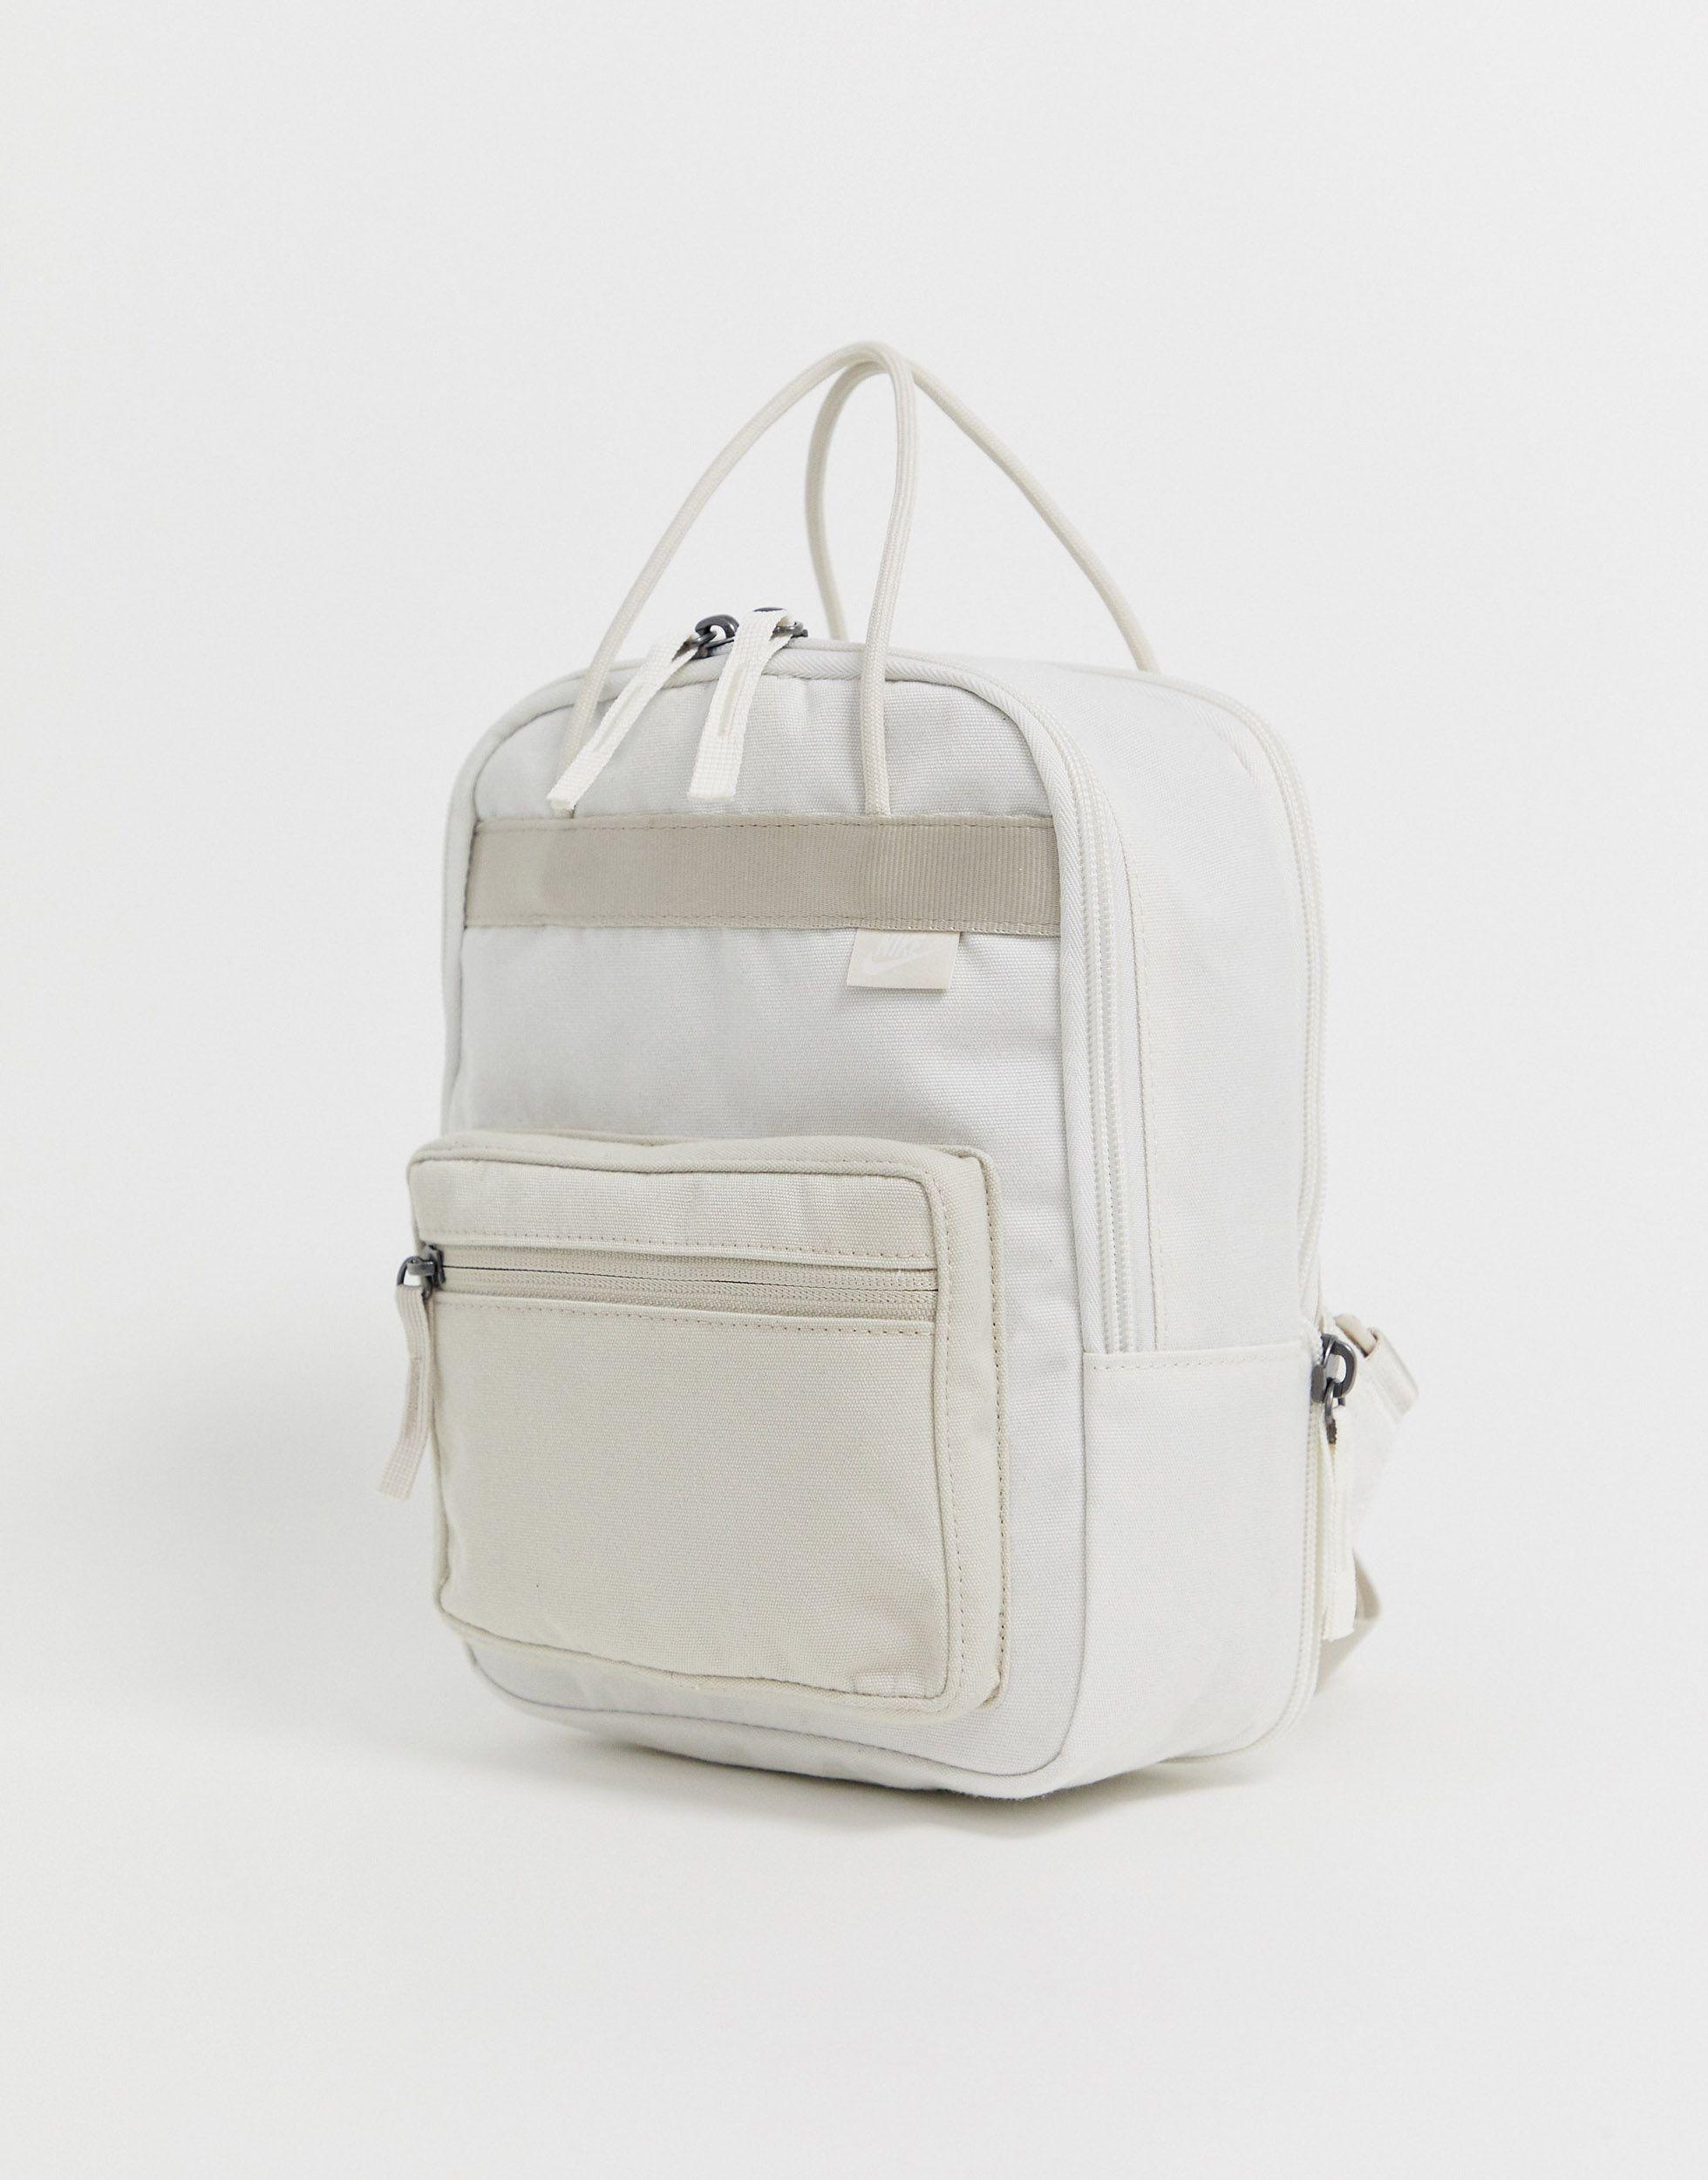 Nike Canvas Tanjun Mini Backpack in Natural | Lyst Australia